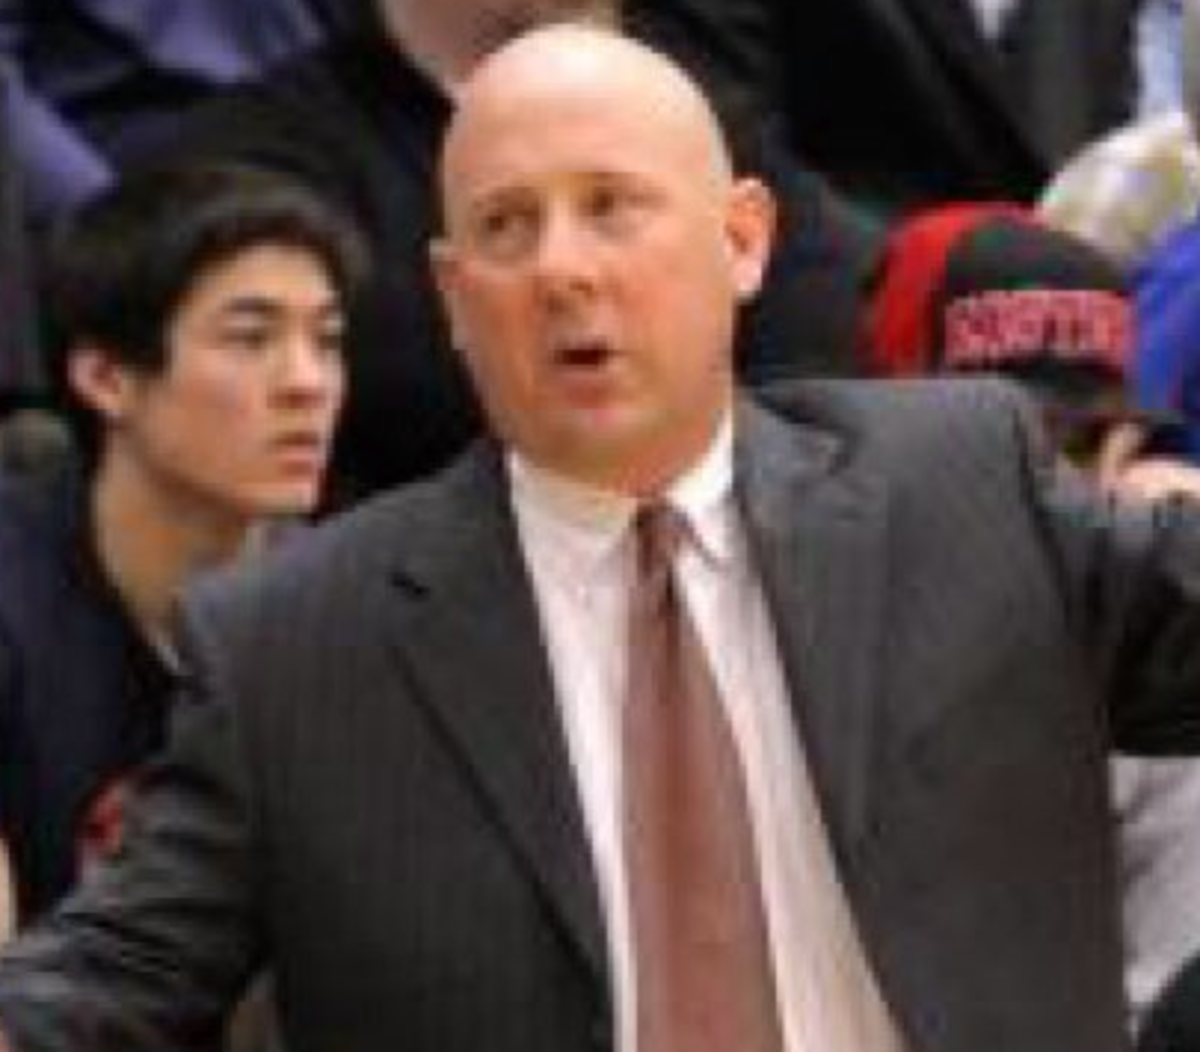 Eastern Washington basketball's head coach.